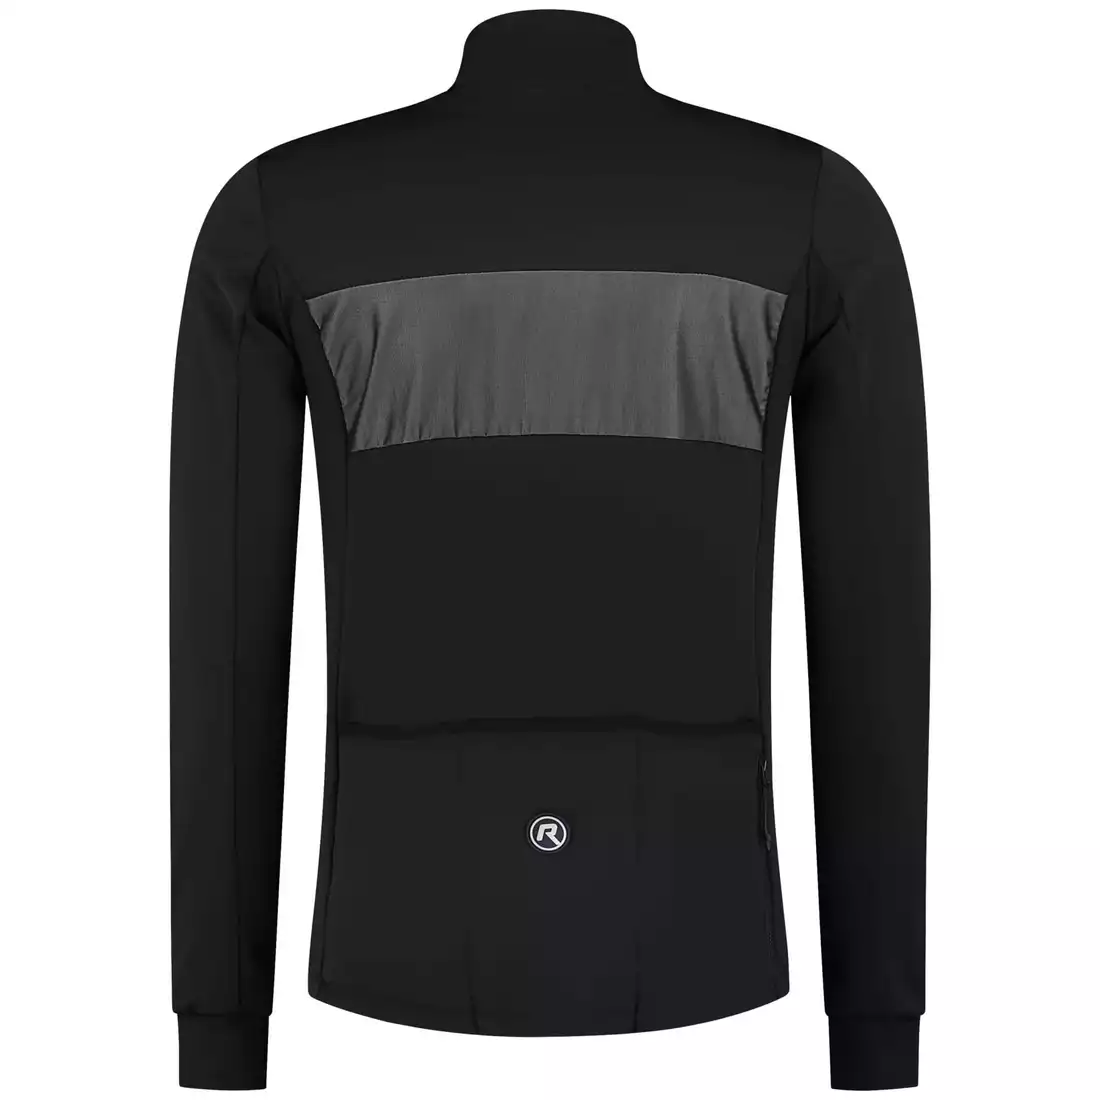 Rogelli ATTQ men's winter cycling jacket, black and gray